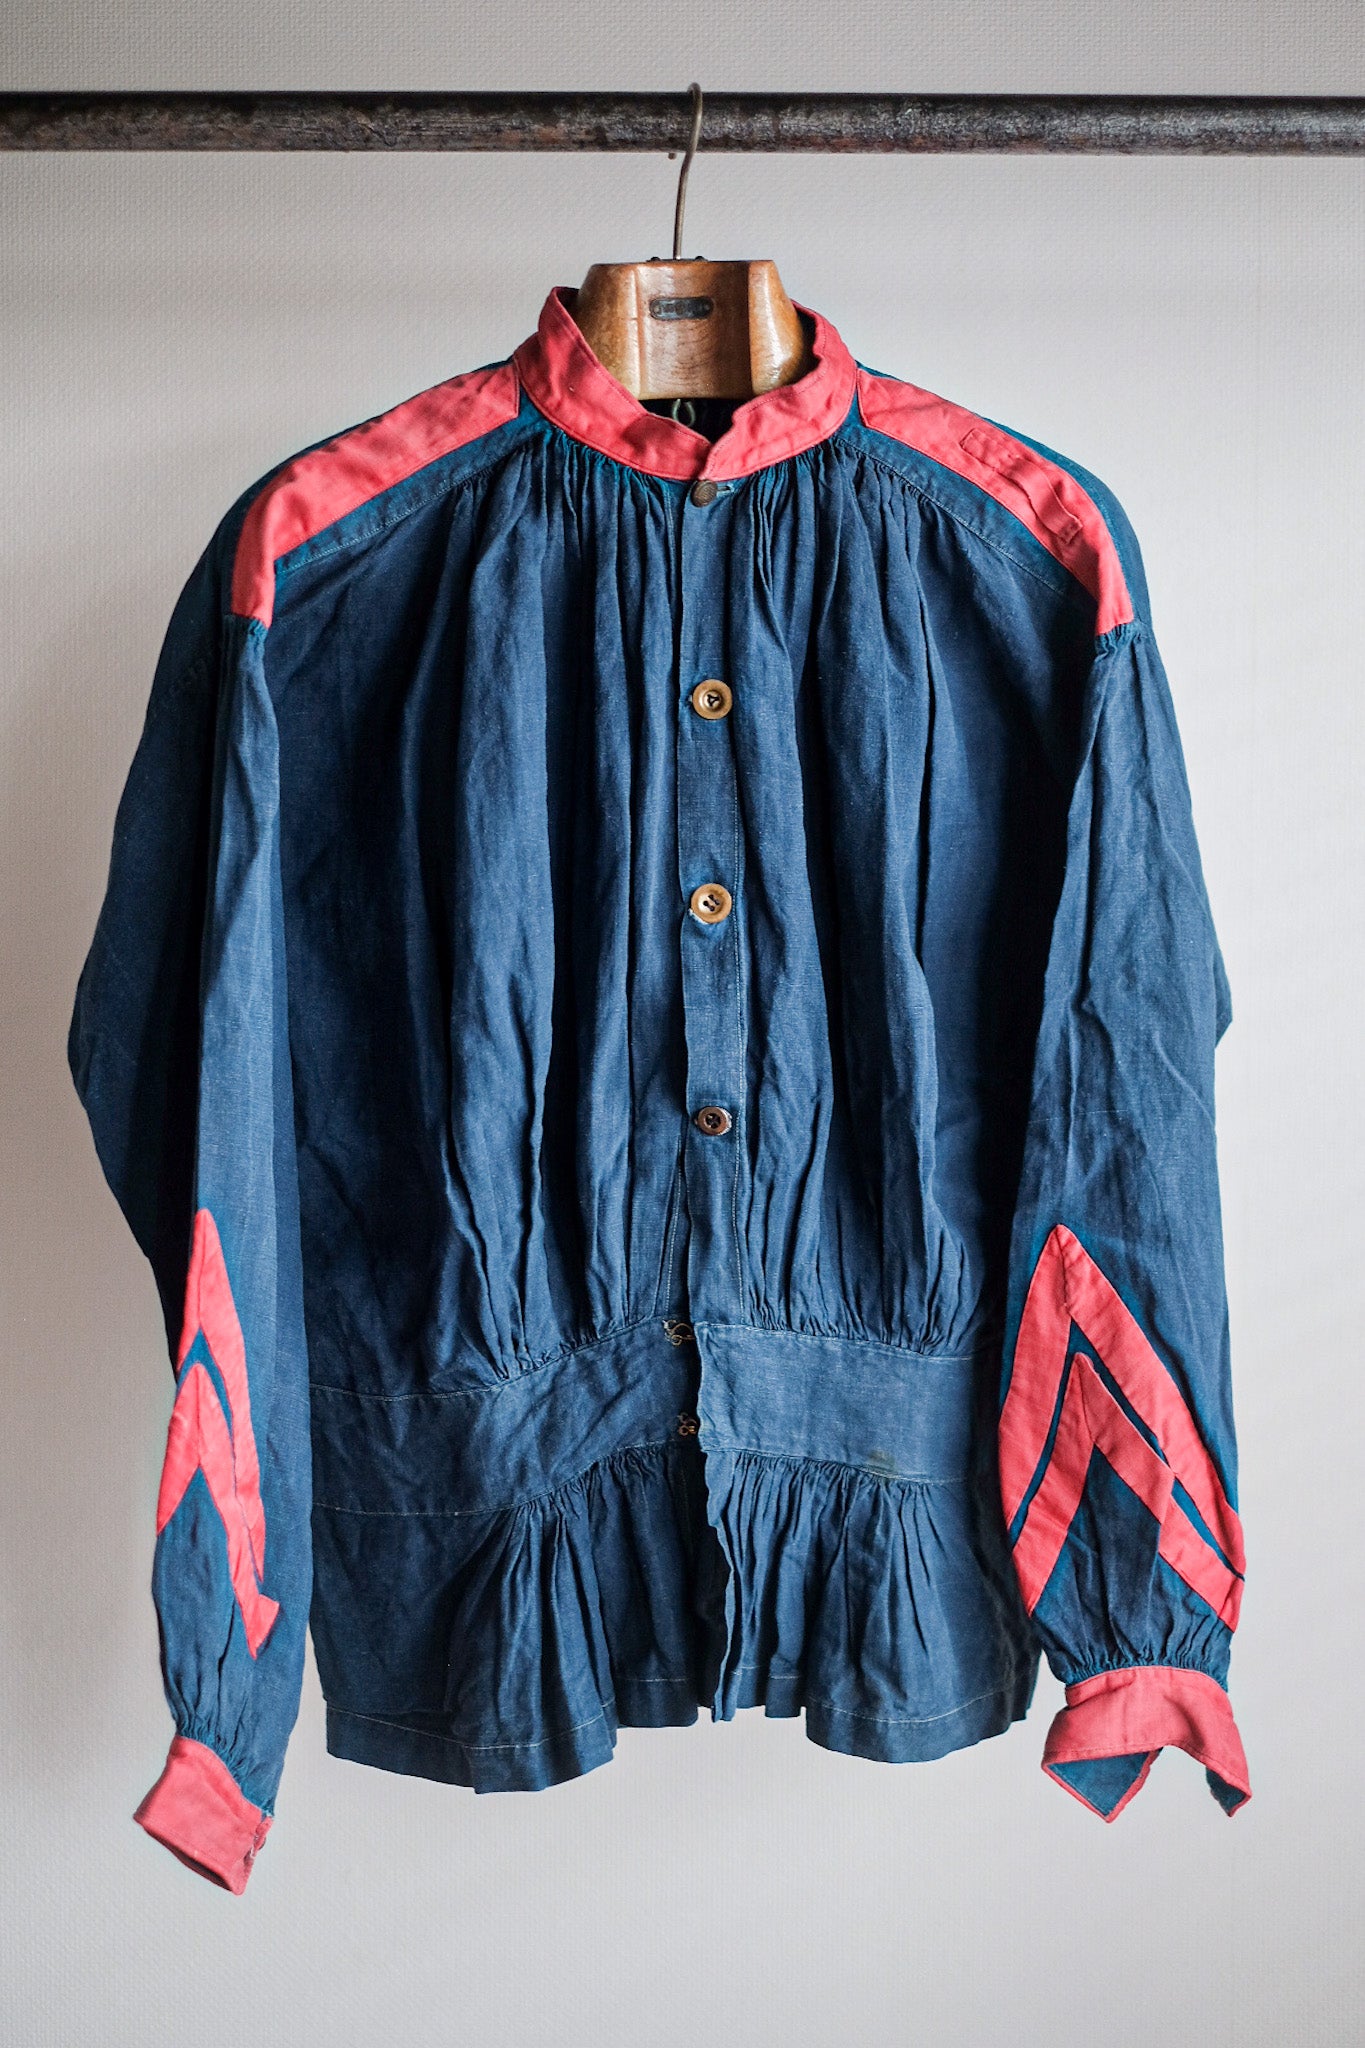 [Late 19th C] French Antique Indigo Linen Fireman Bourgeron Jacket